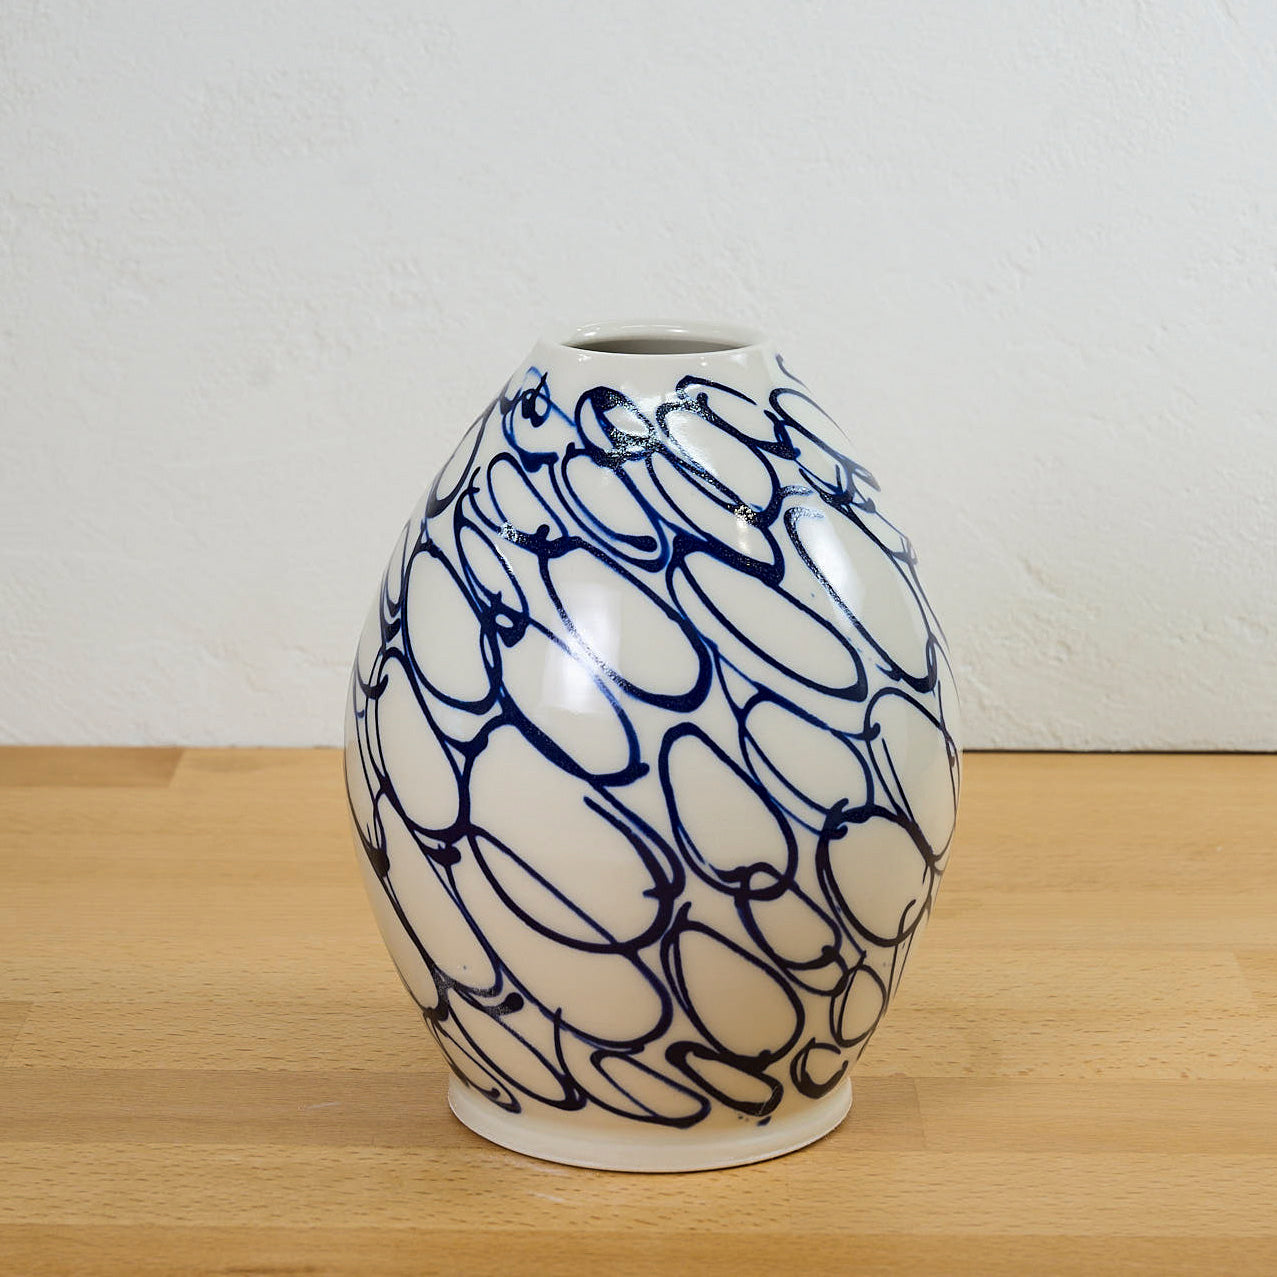 Ltd. Edition Vase- Circles